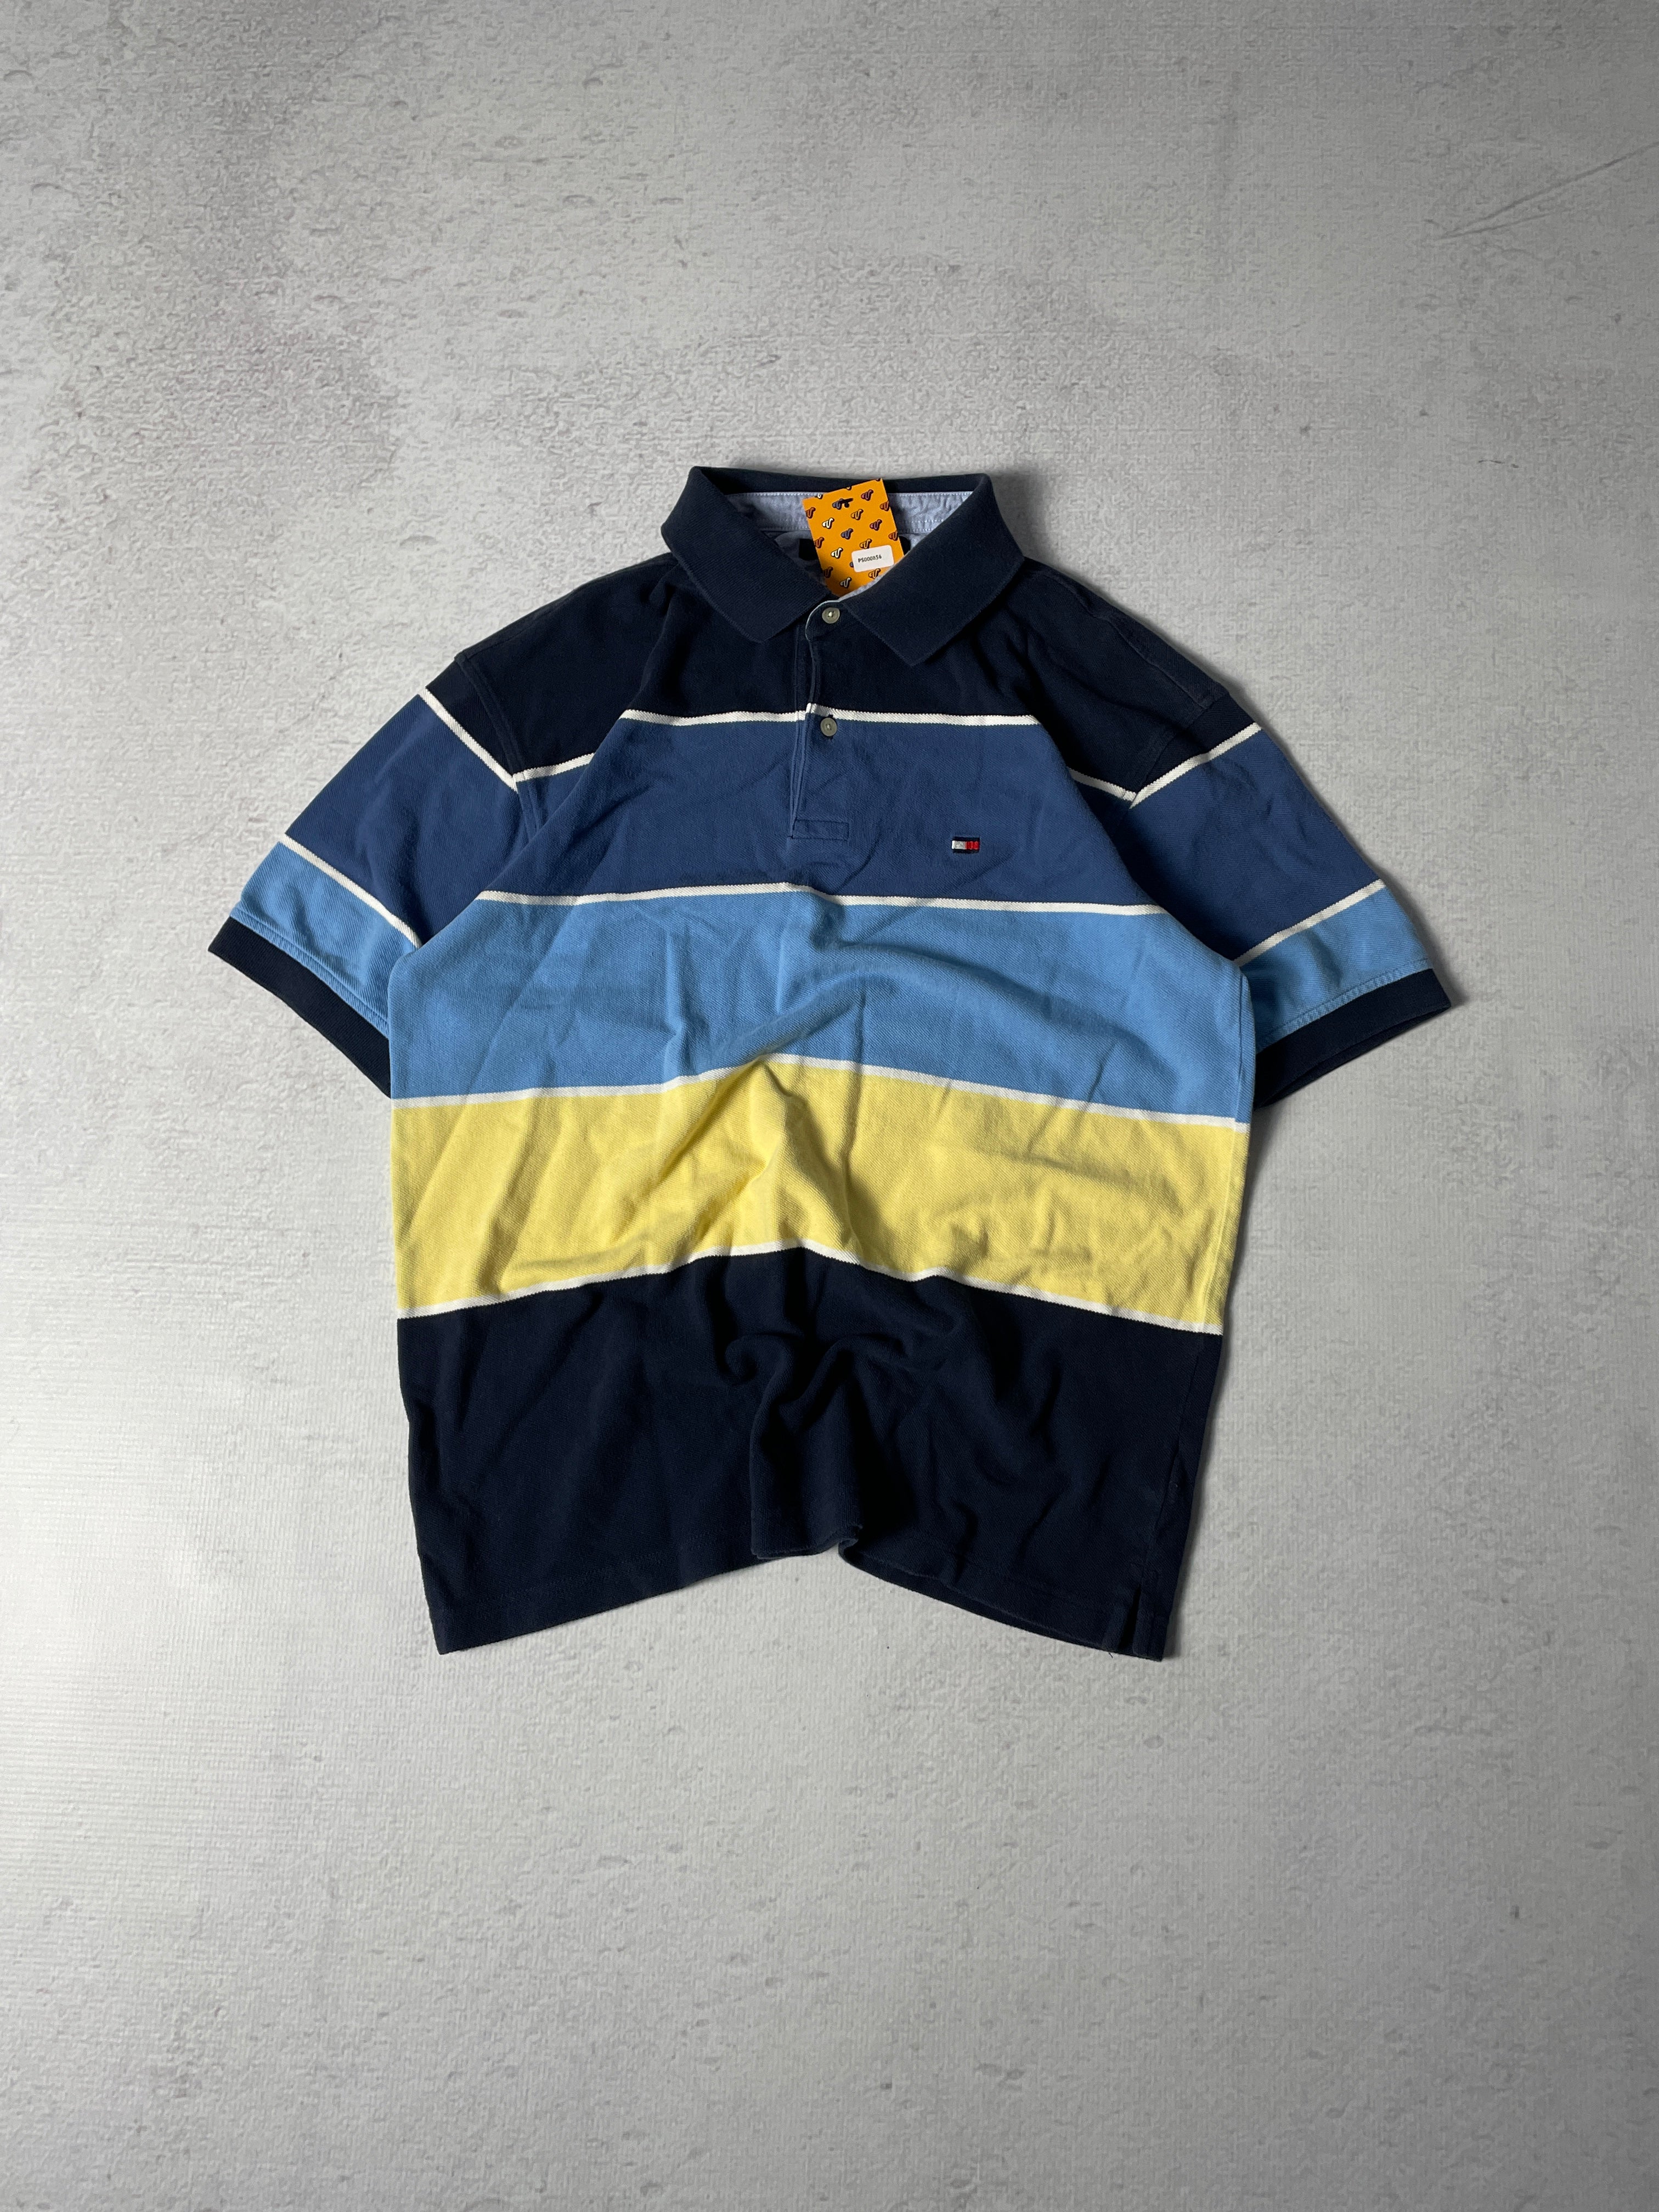 Vintage Tommy Hilfiger Polo Shirt - Men's Medium